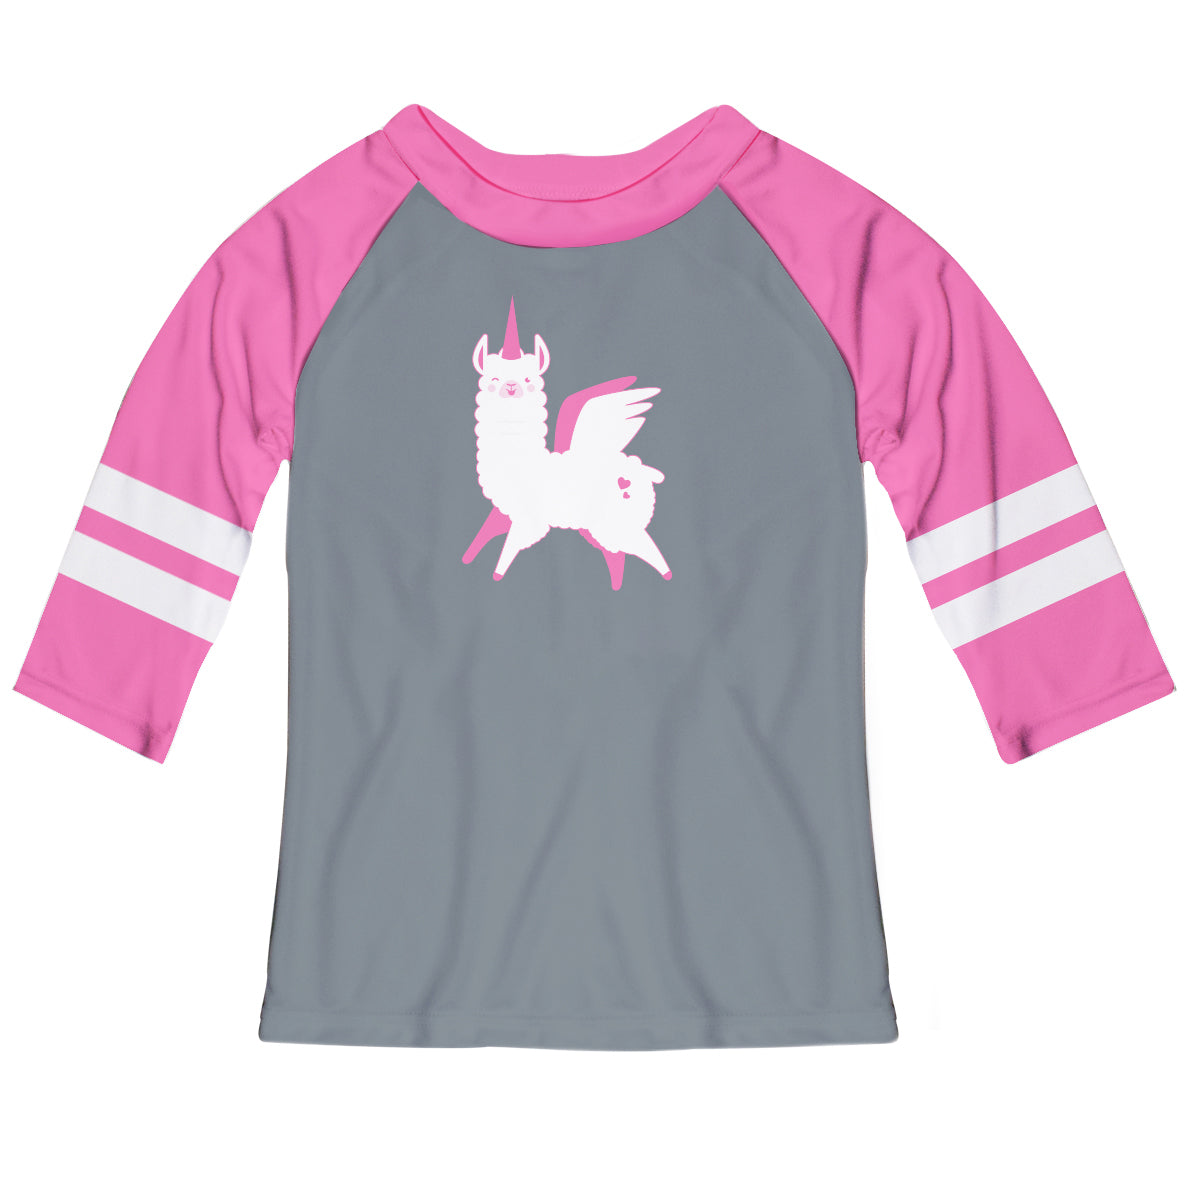 Gray and pink 'Llamacorn' raglan tee shirt with name - Wimziy&Co.